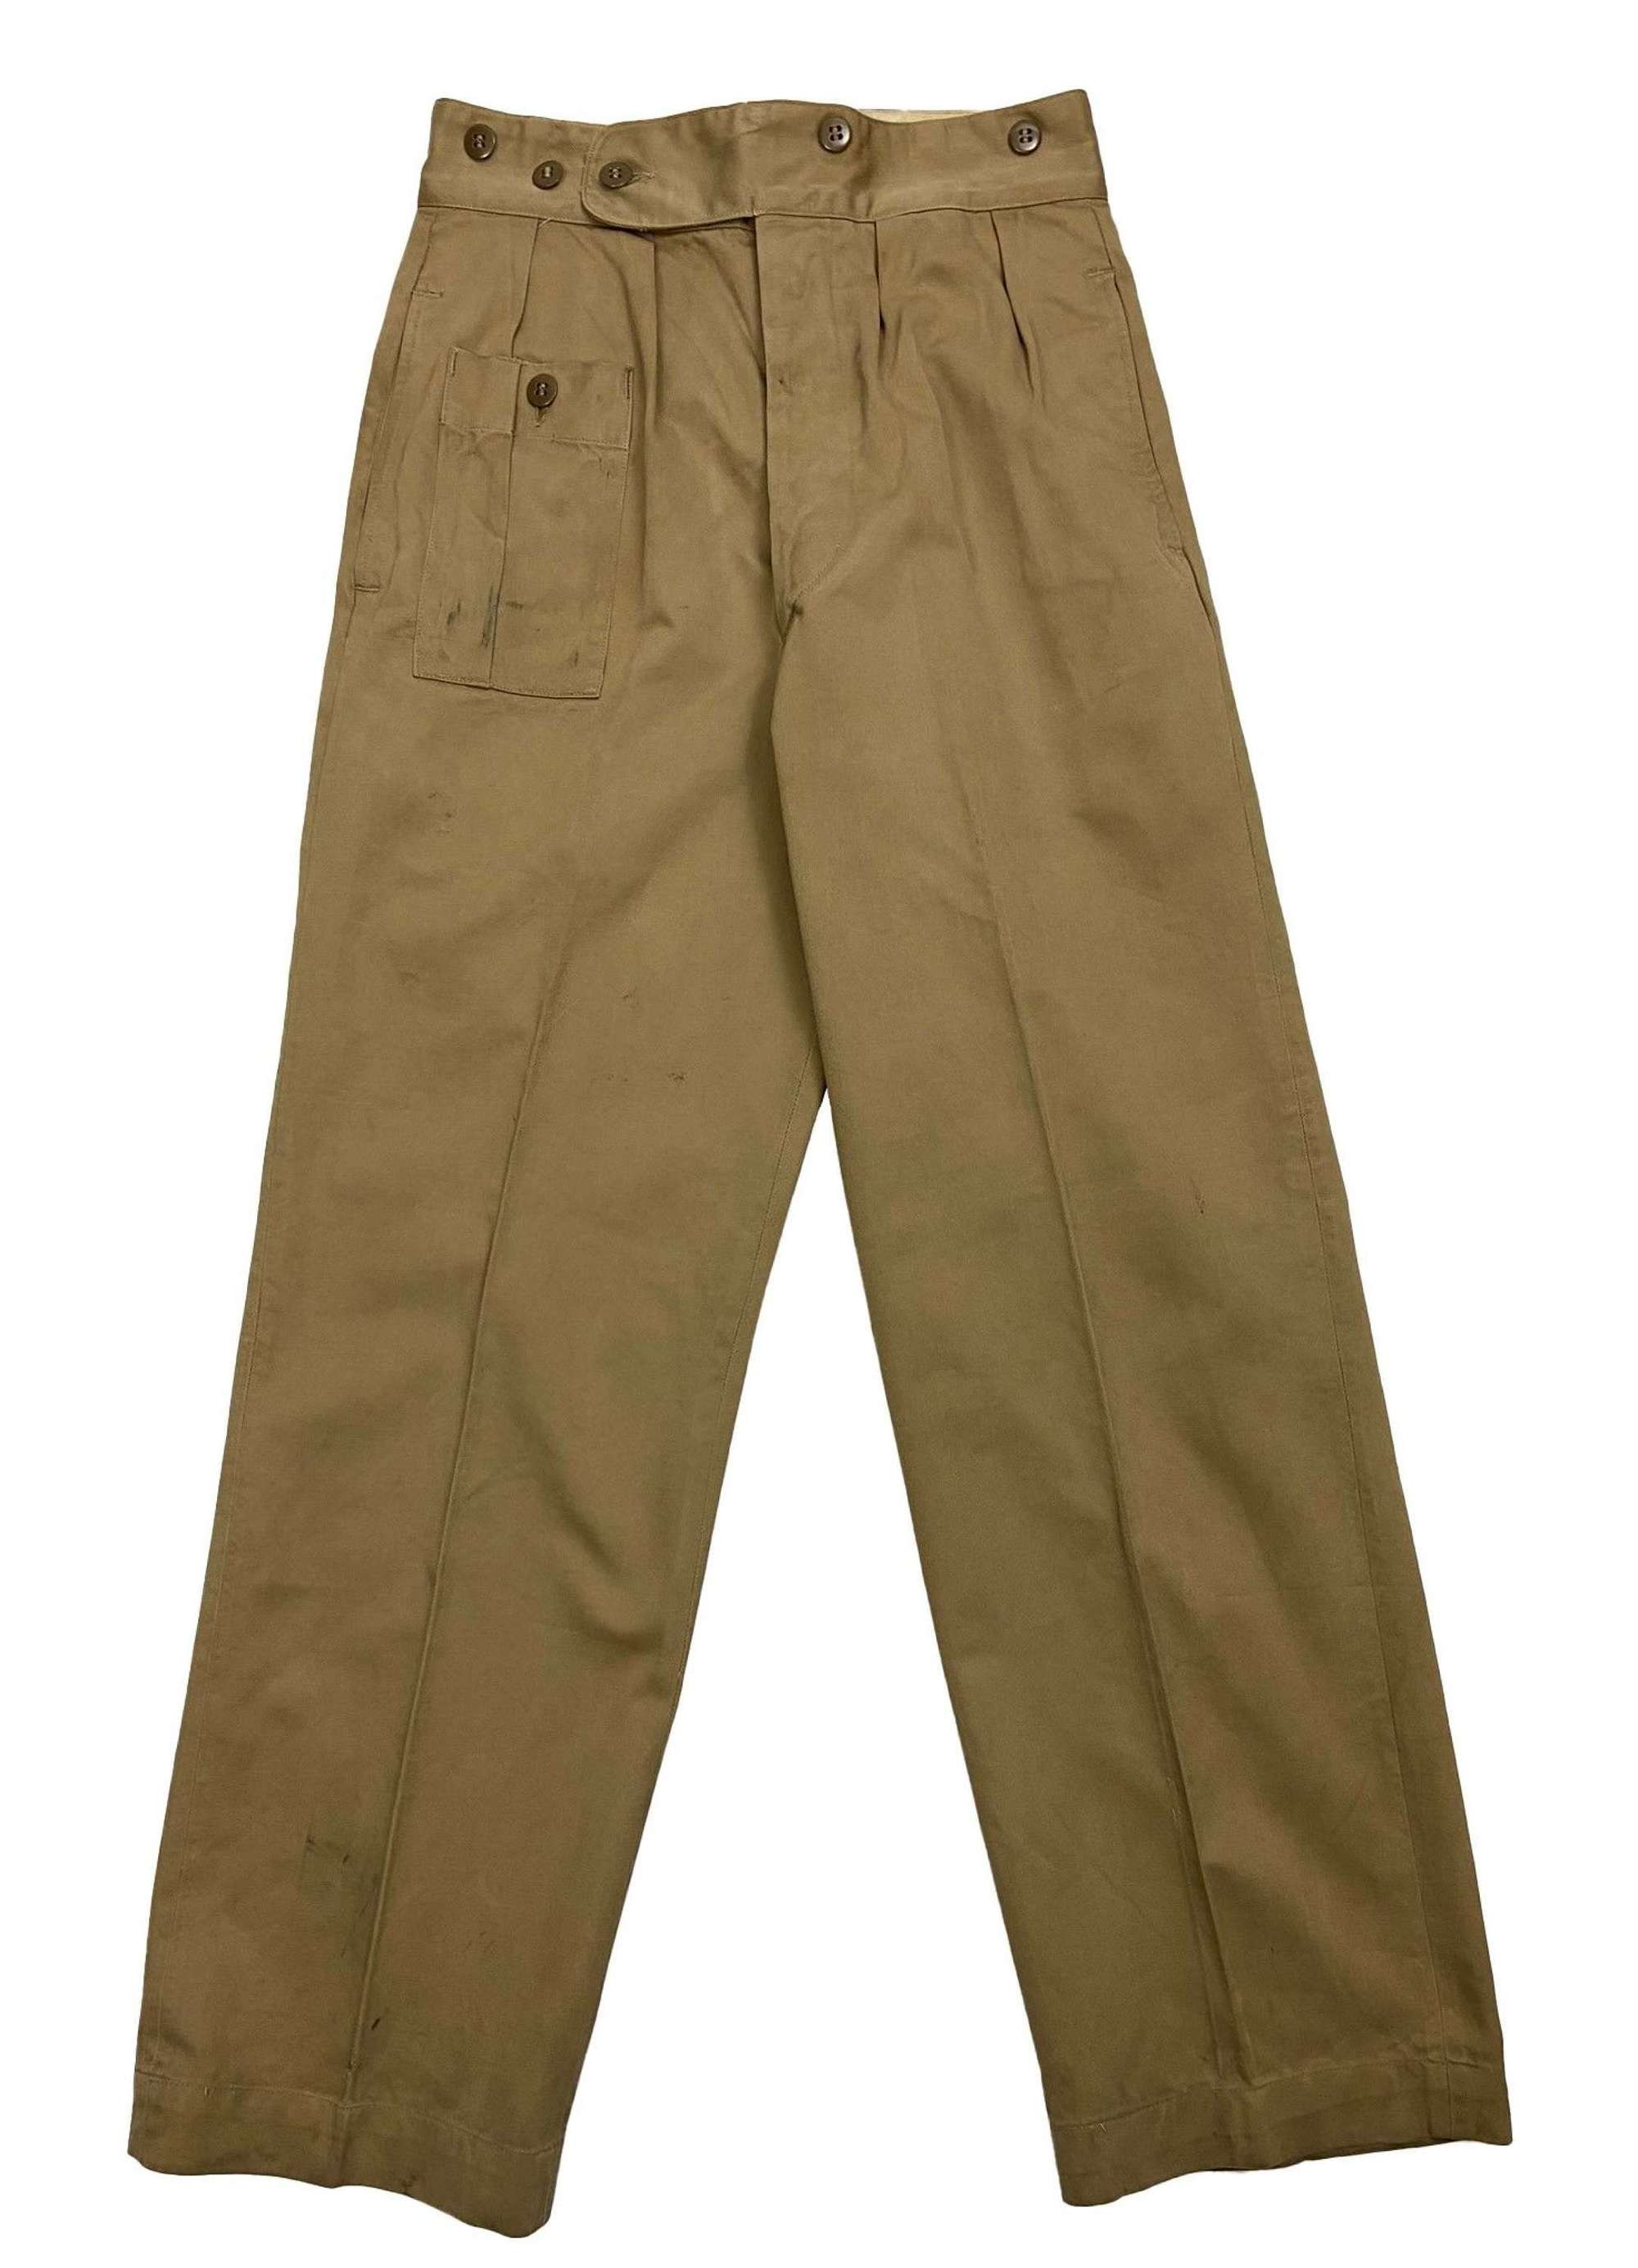 Original WW2 British Army War Aid Battle Dress Trousers - Size 1